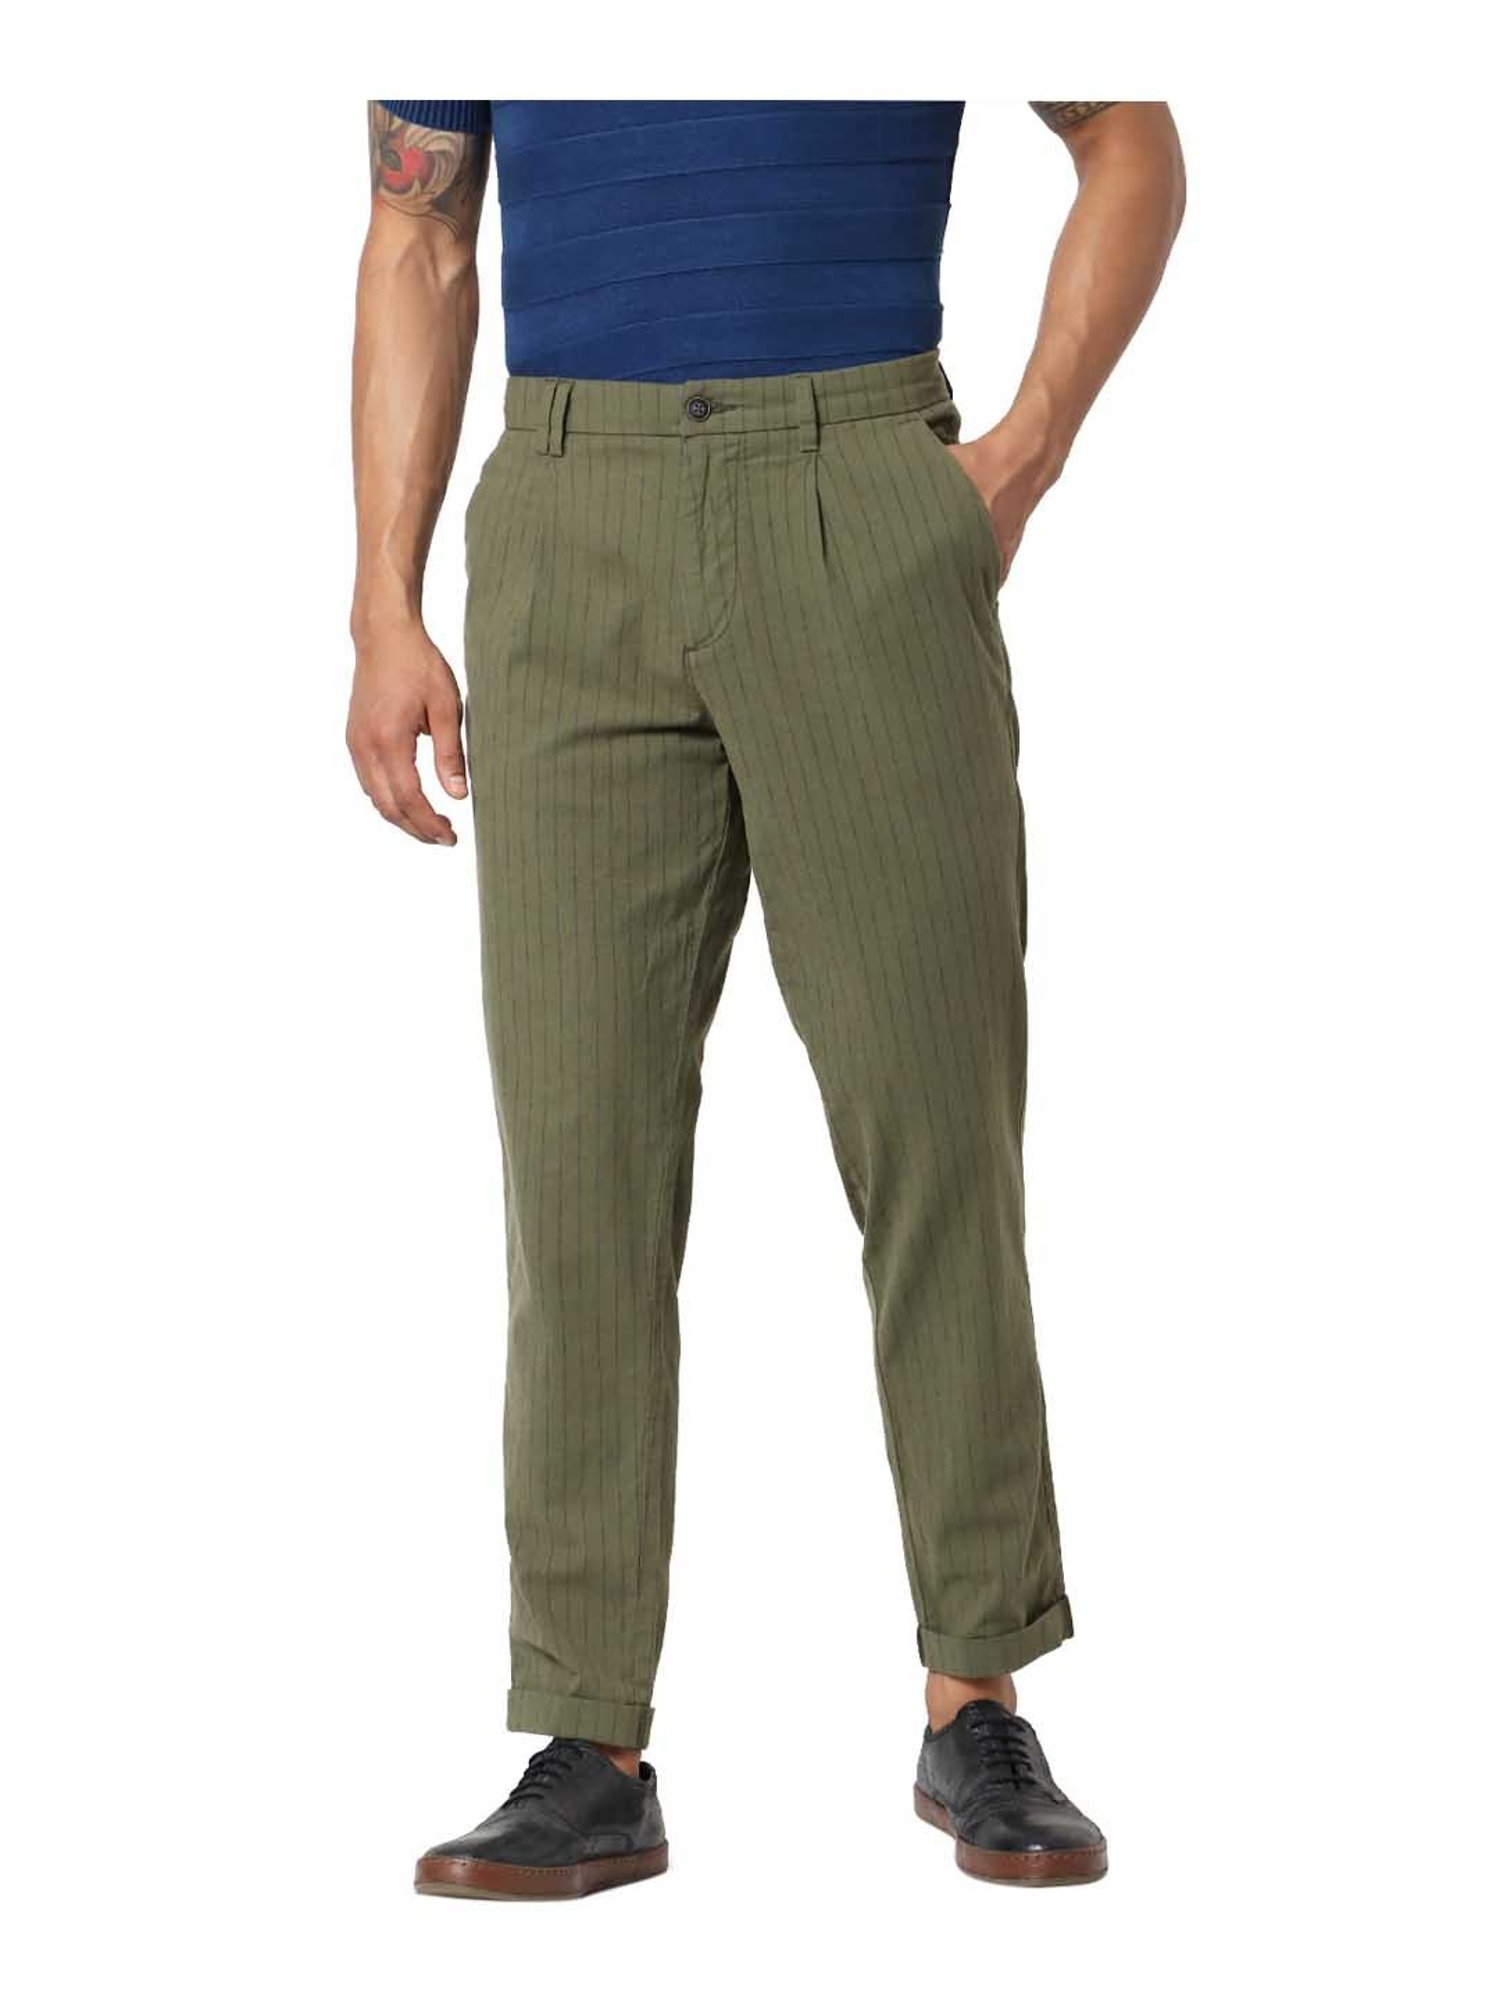 Jack  Jones Casual Trousers  Buy Jack  Jones Purple Mid Rise Check Linen  Trousers OnlineNykaa fashion